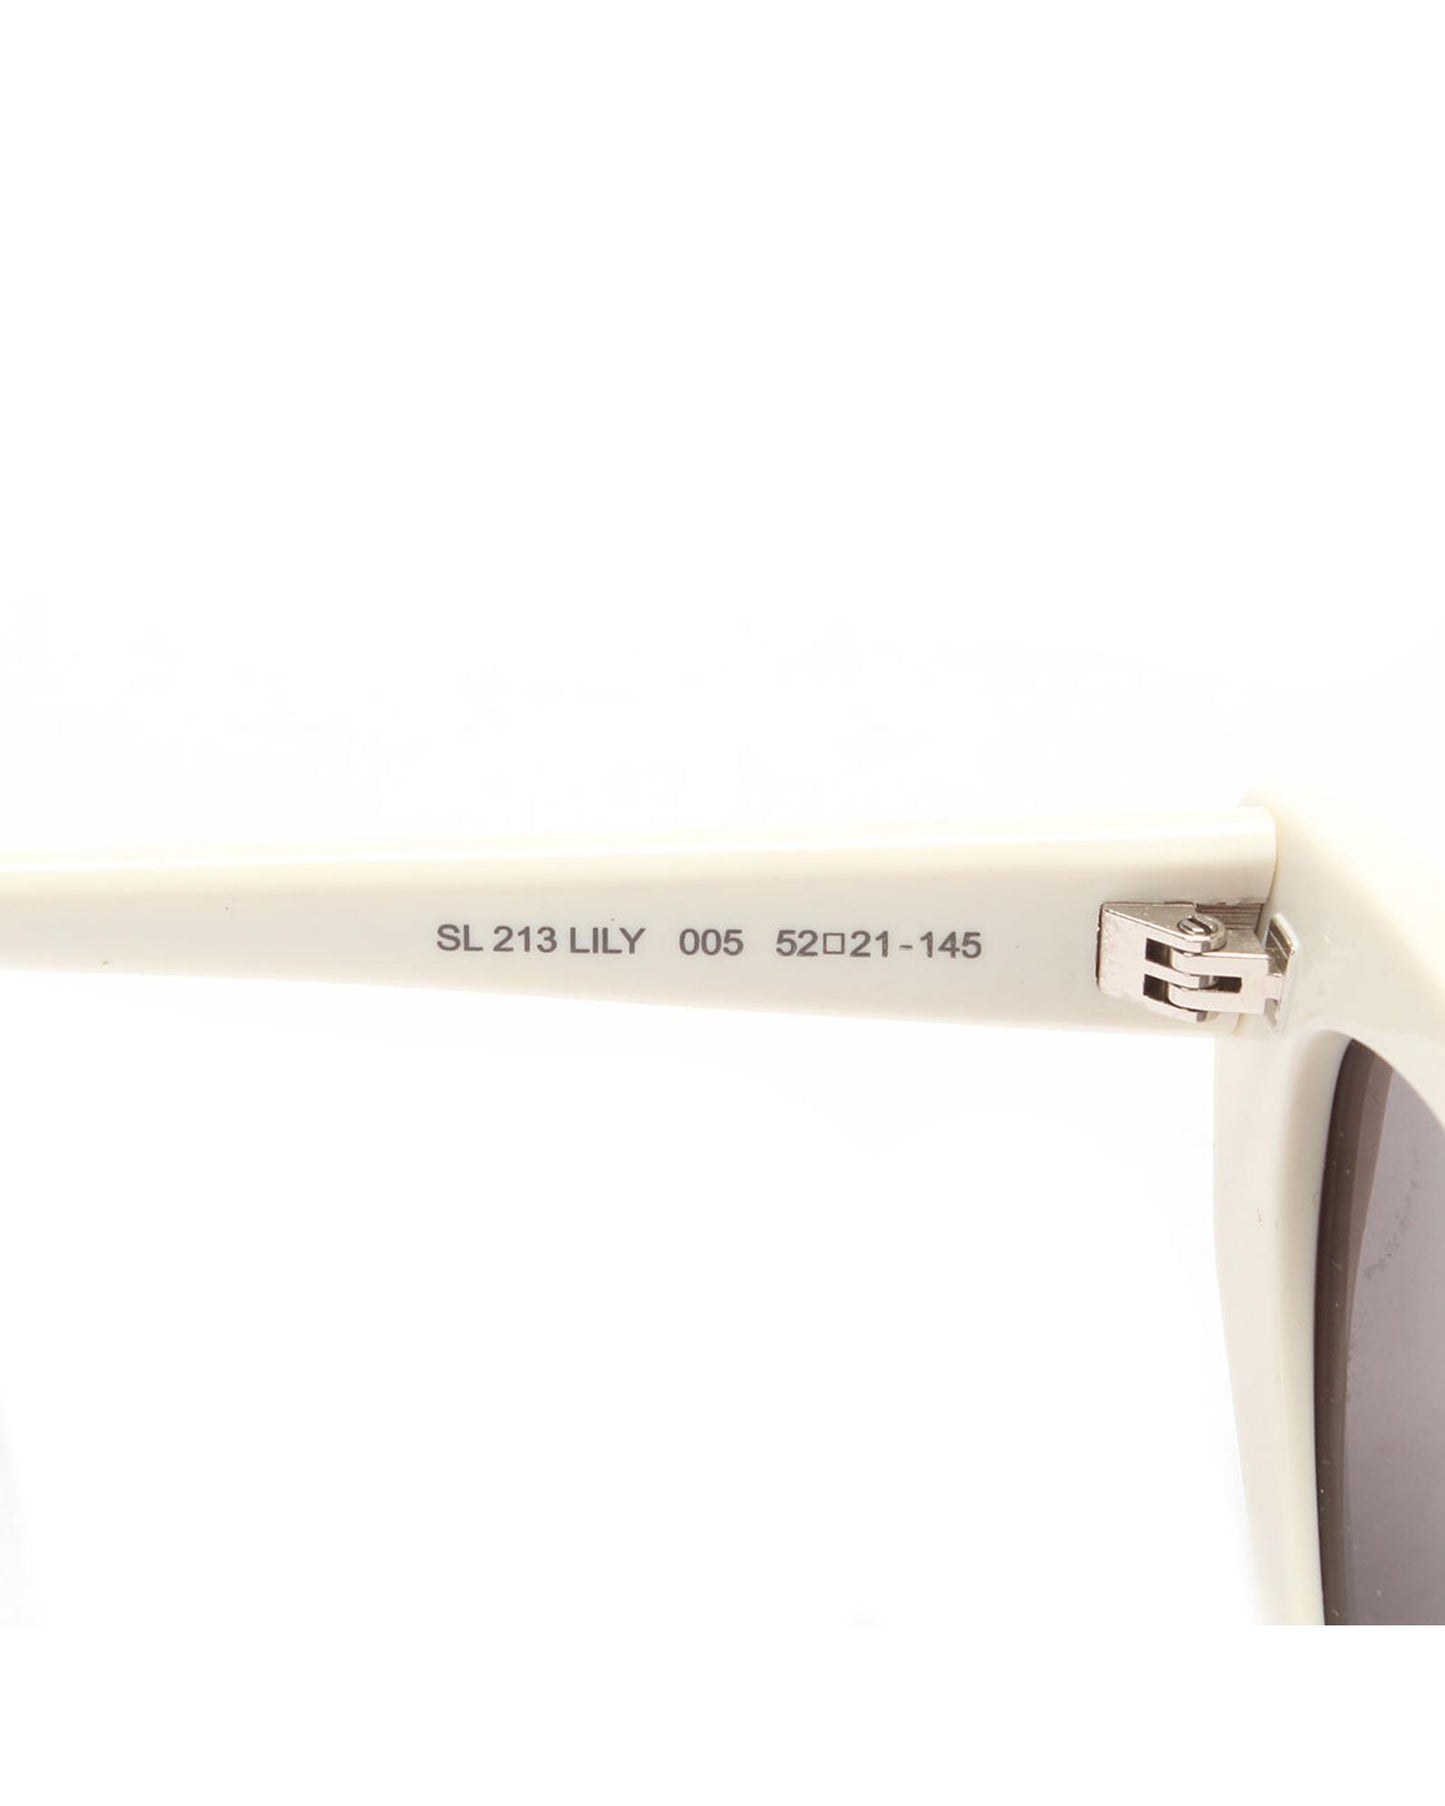 YSL Women's Tinted Cat Eye Sunglasses in White